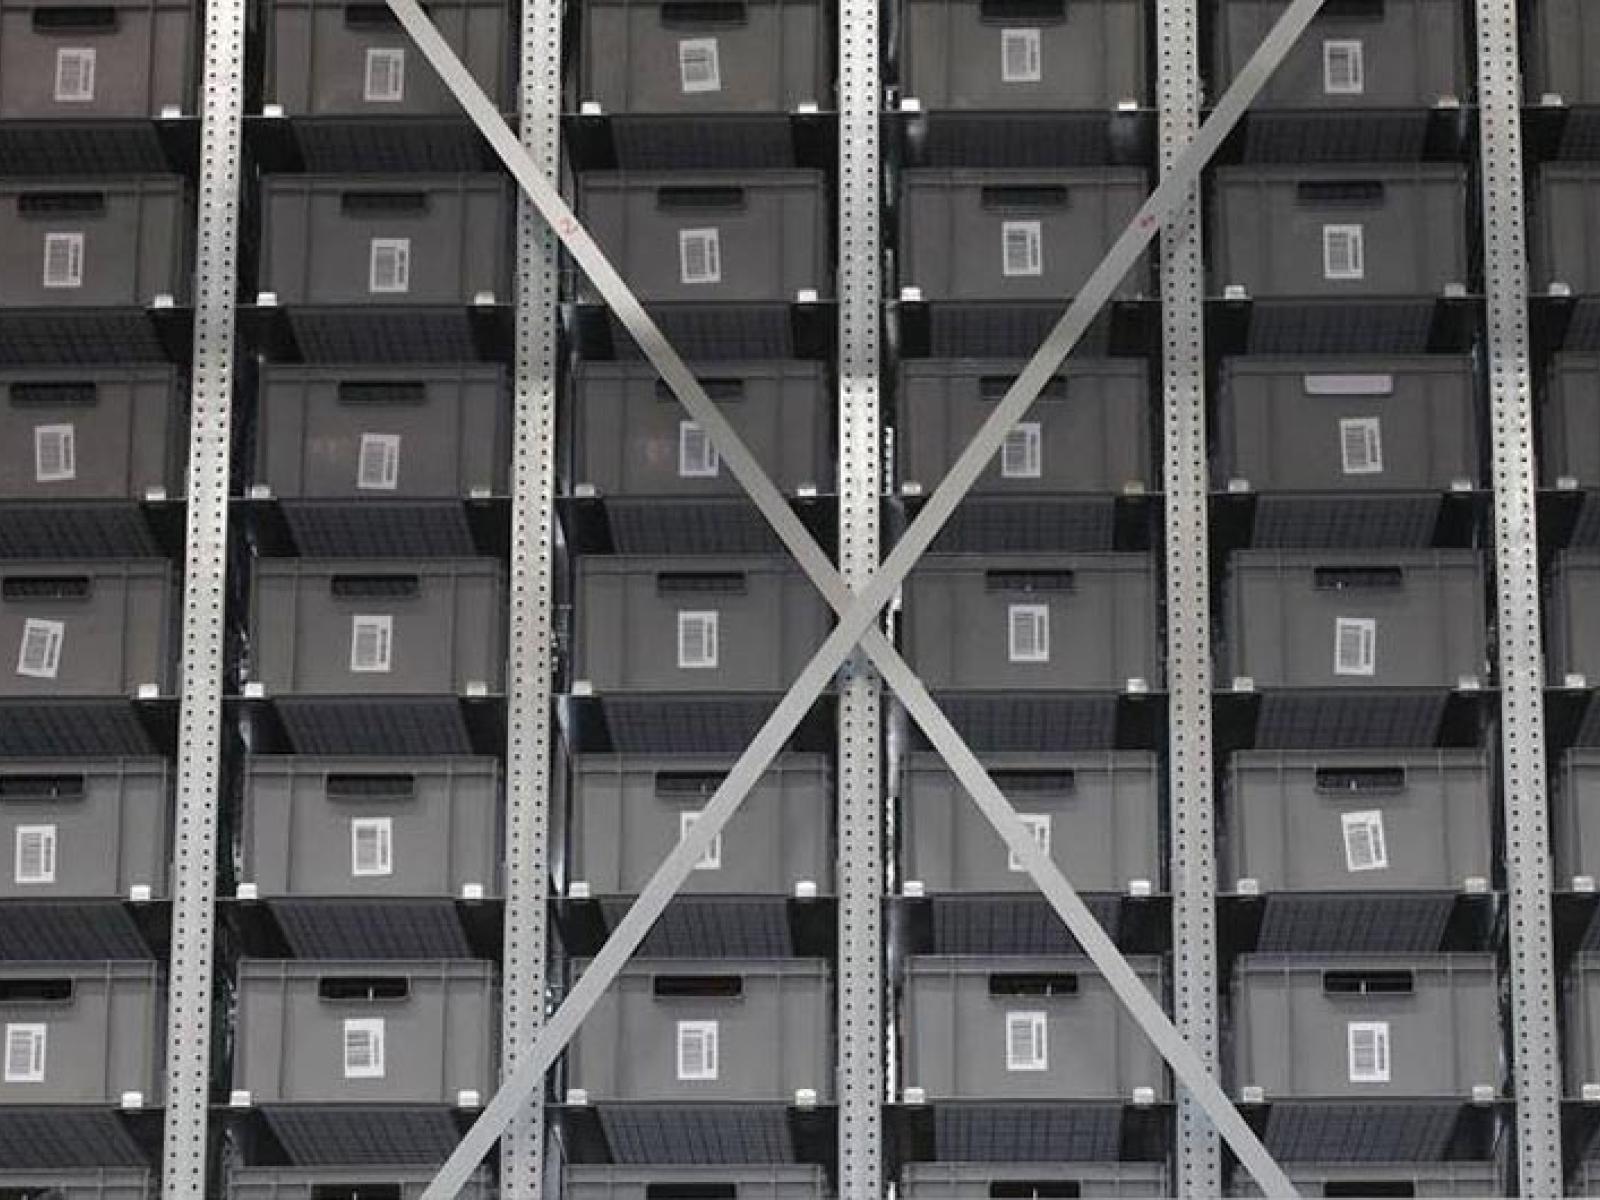 Mini Load Storage System | Storage Solutions